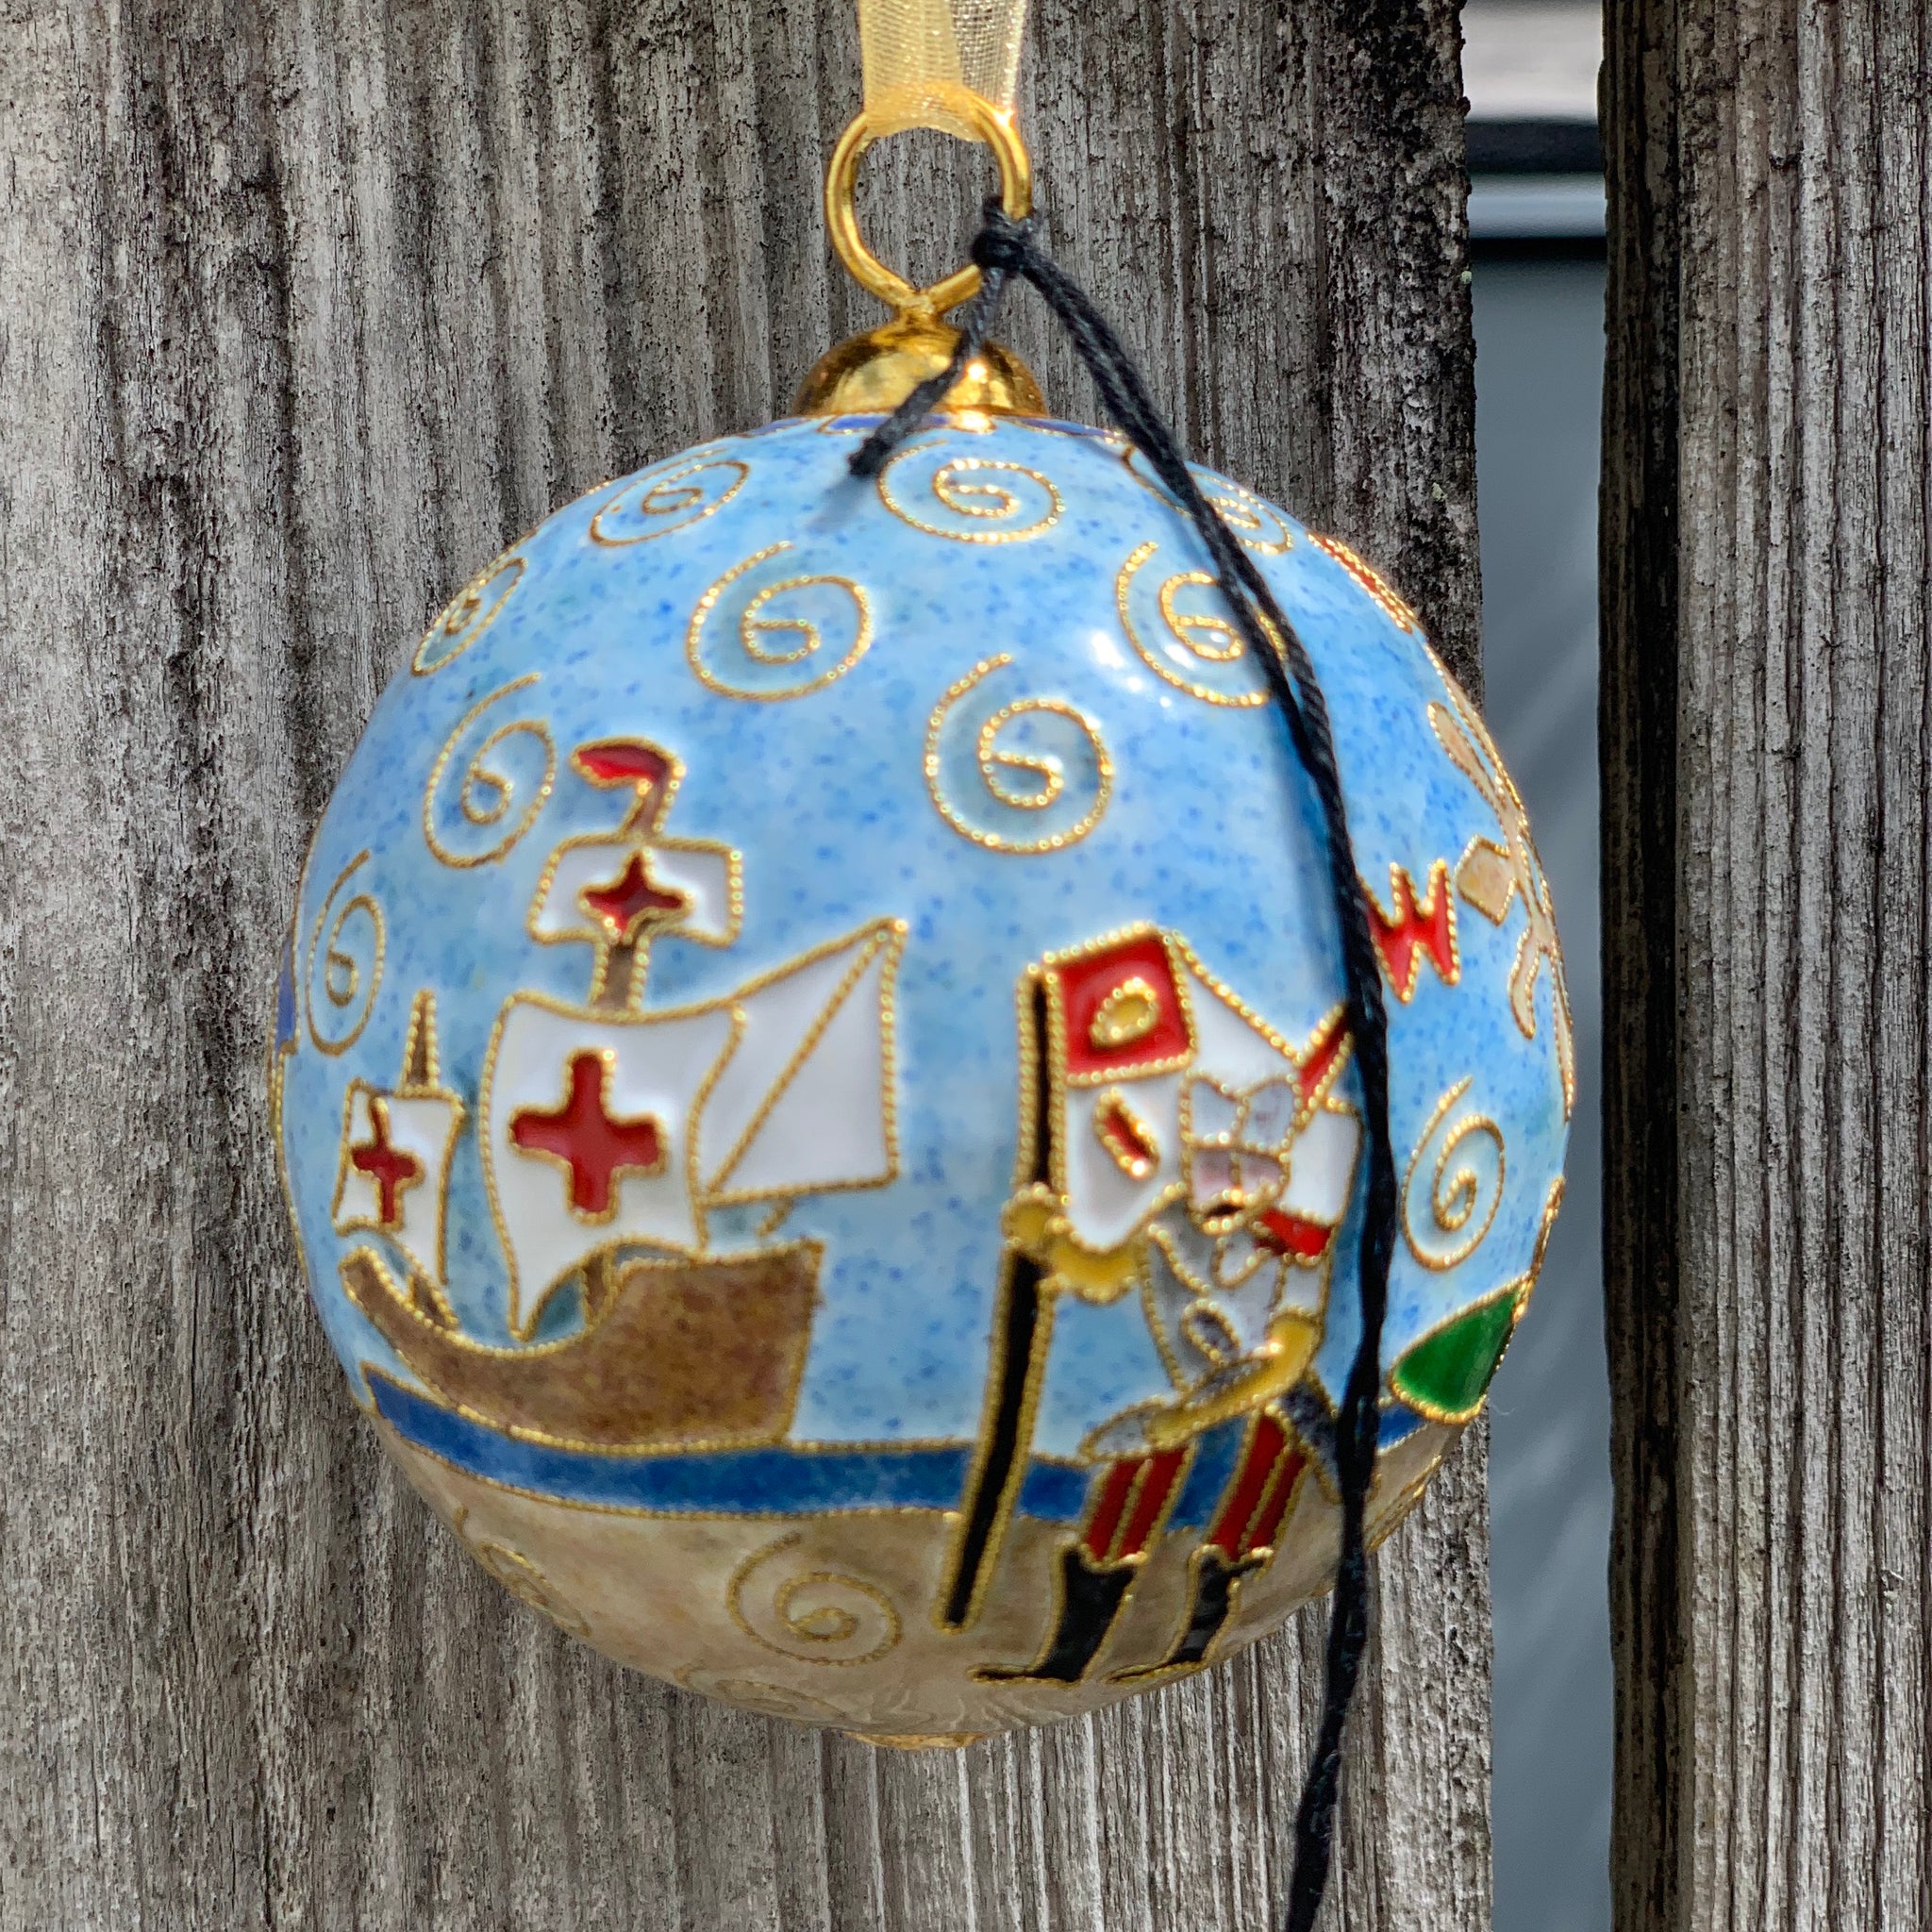 St. Augustine Round Cloisonne Ornament